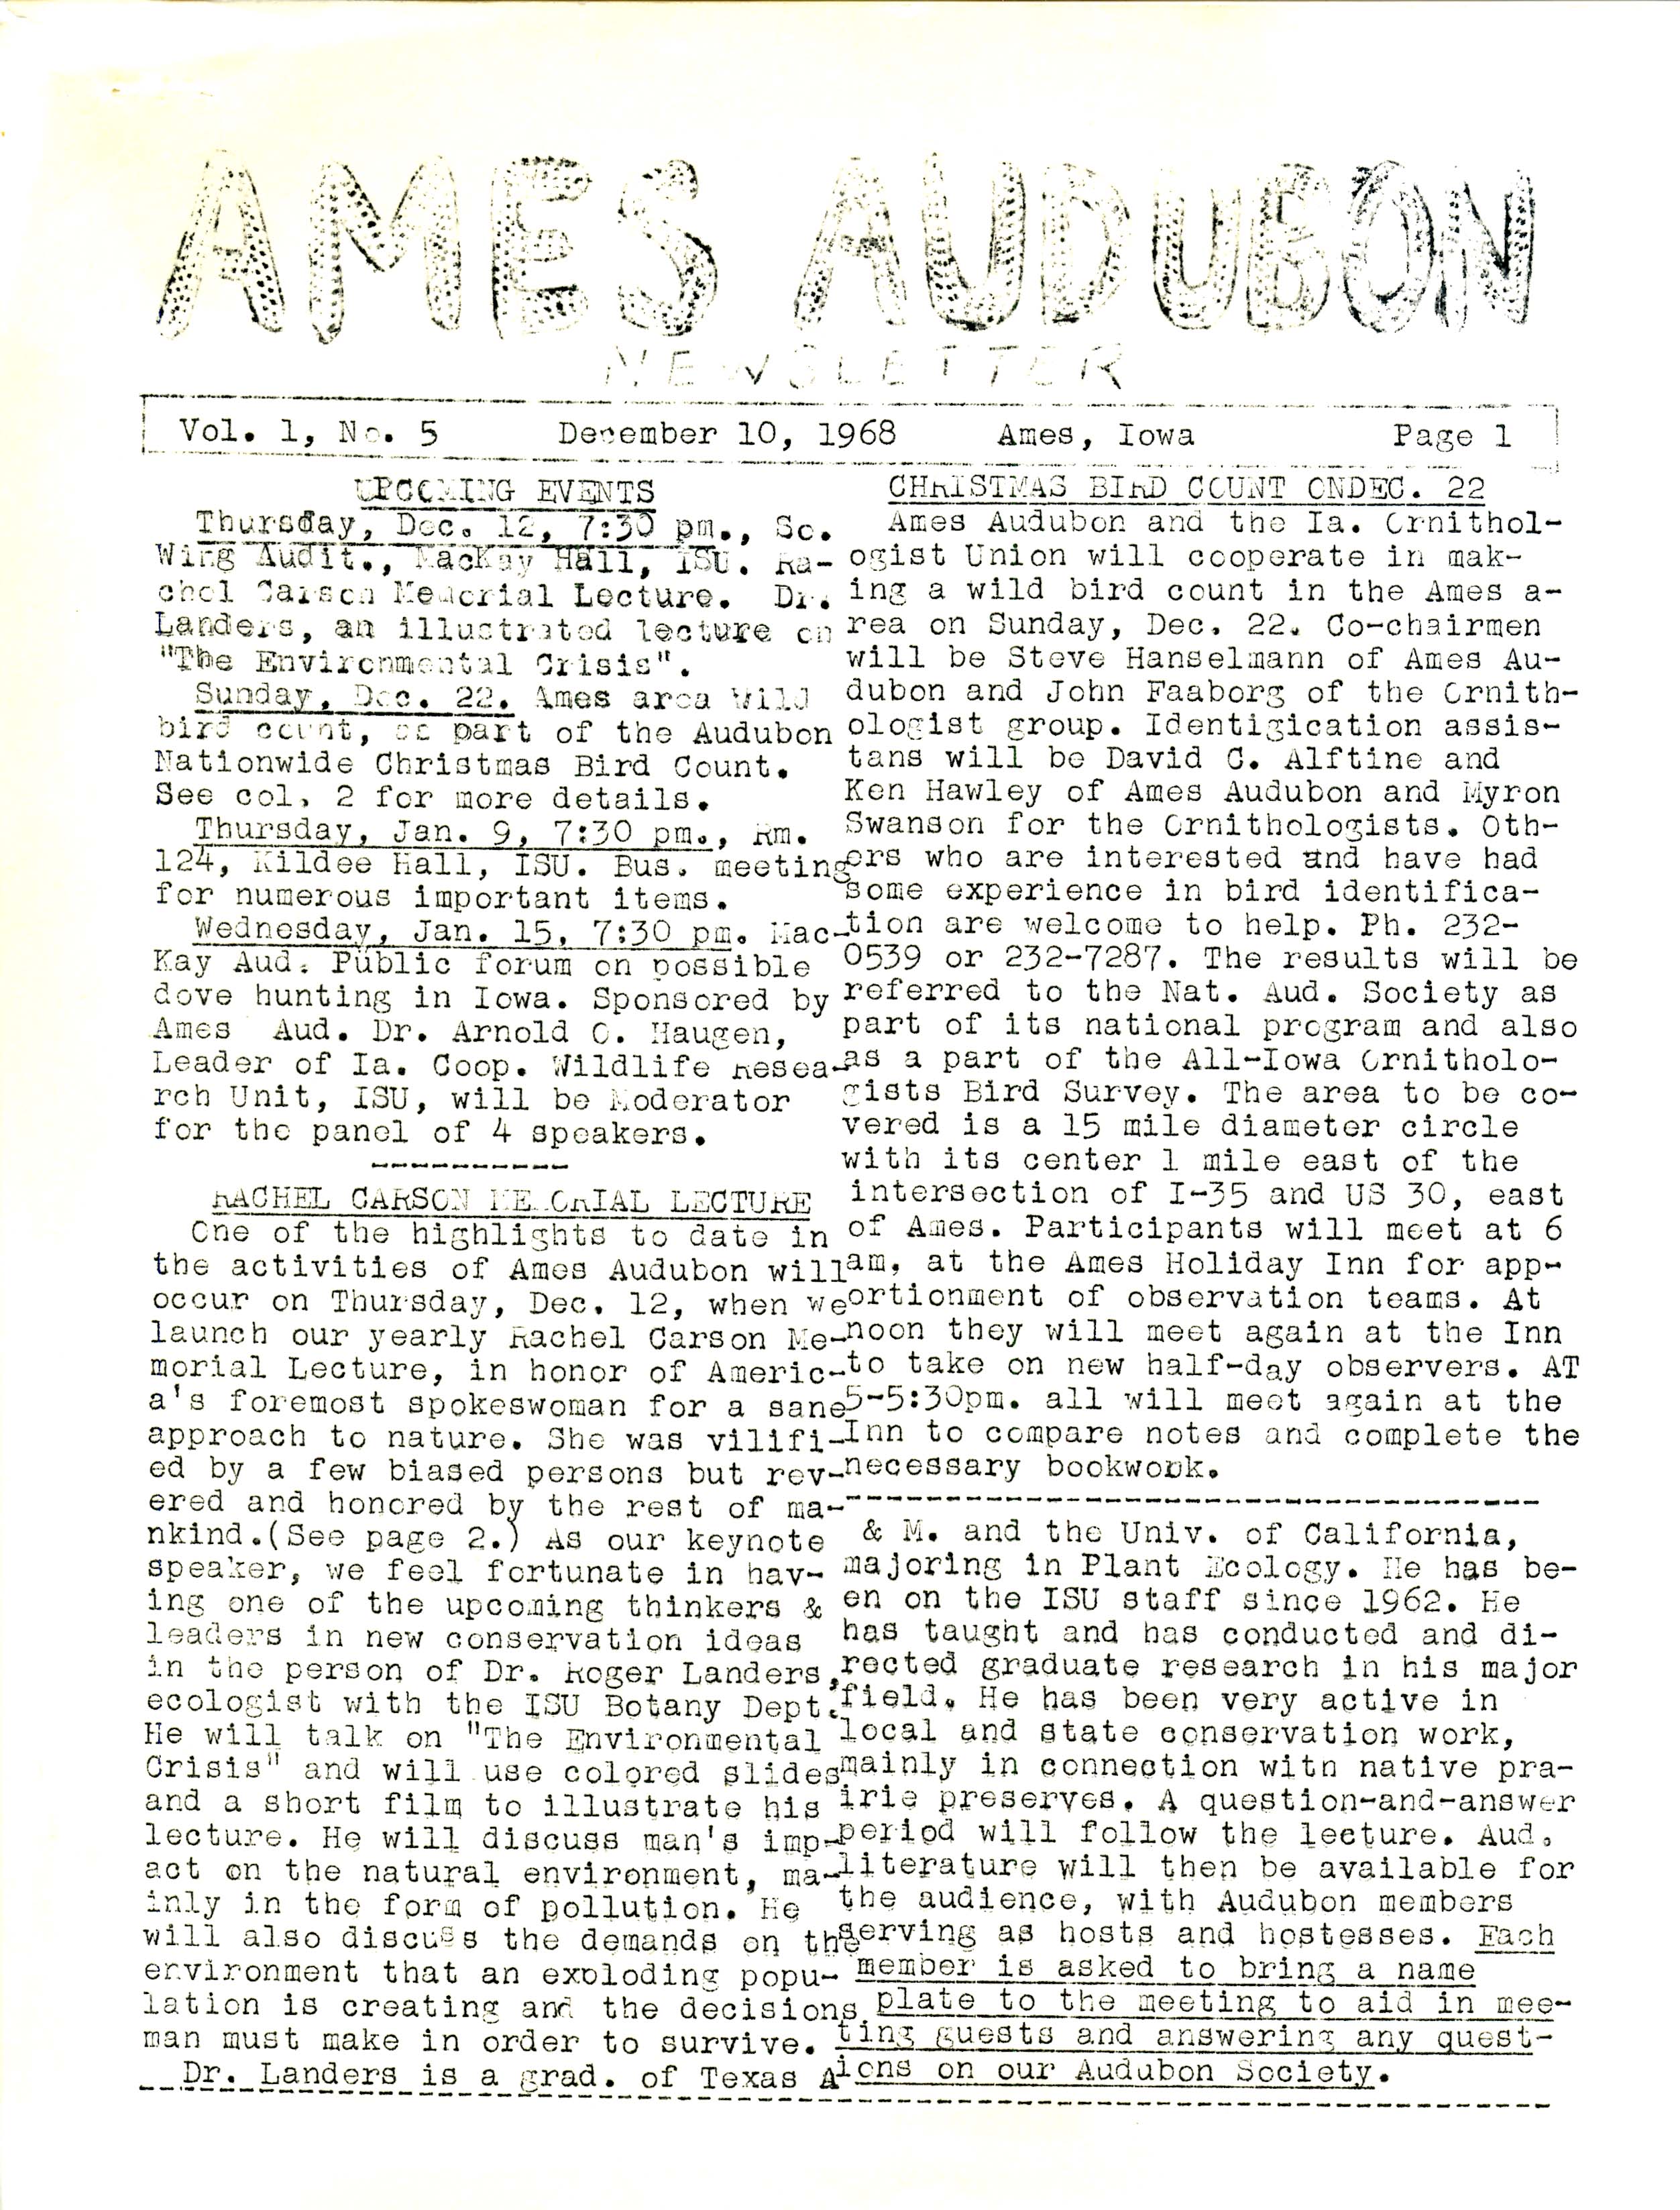 Ames Audubon Newsletter, Volume 1, Number 5, December 10, 1968